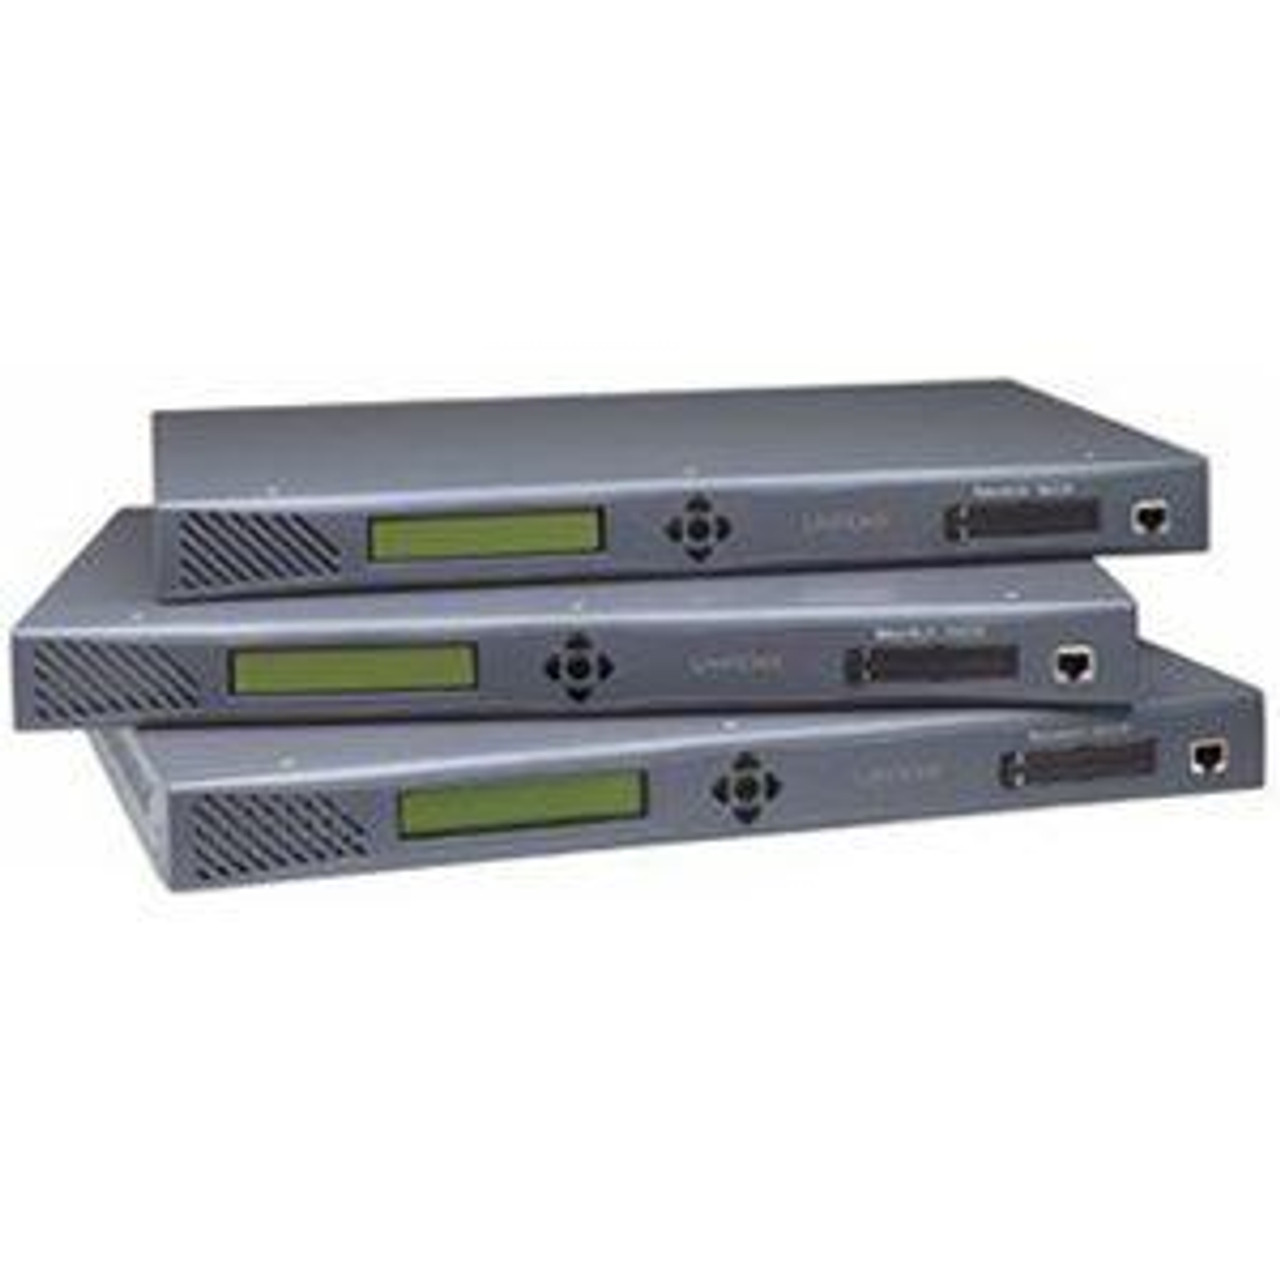 SLC00822N-02 Lantronix 8pt Dual Ac Supp Secure Console Mgr Rohs